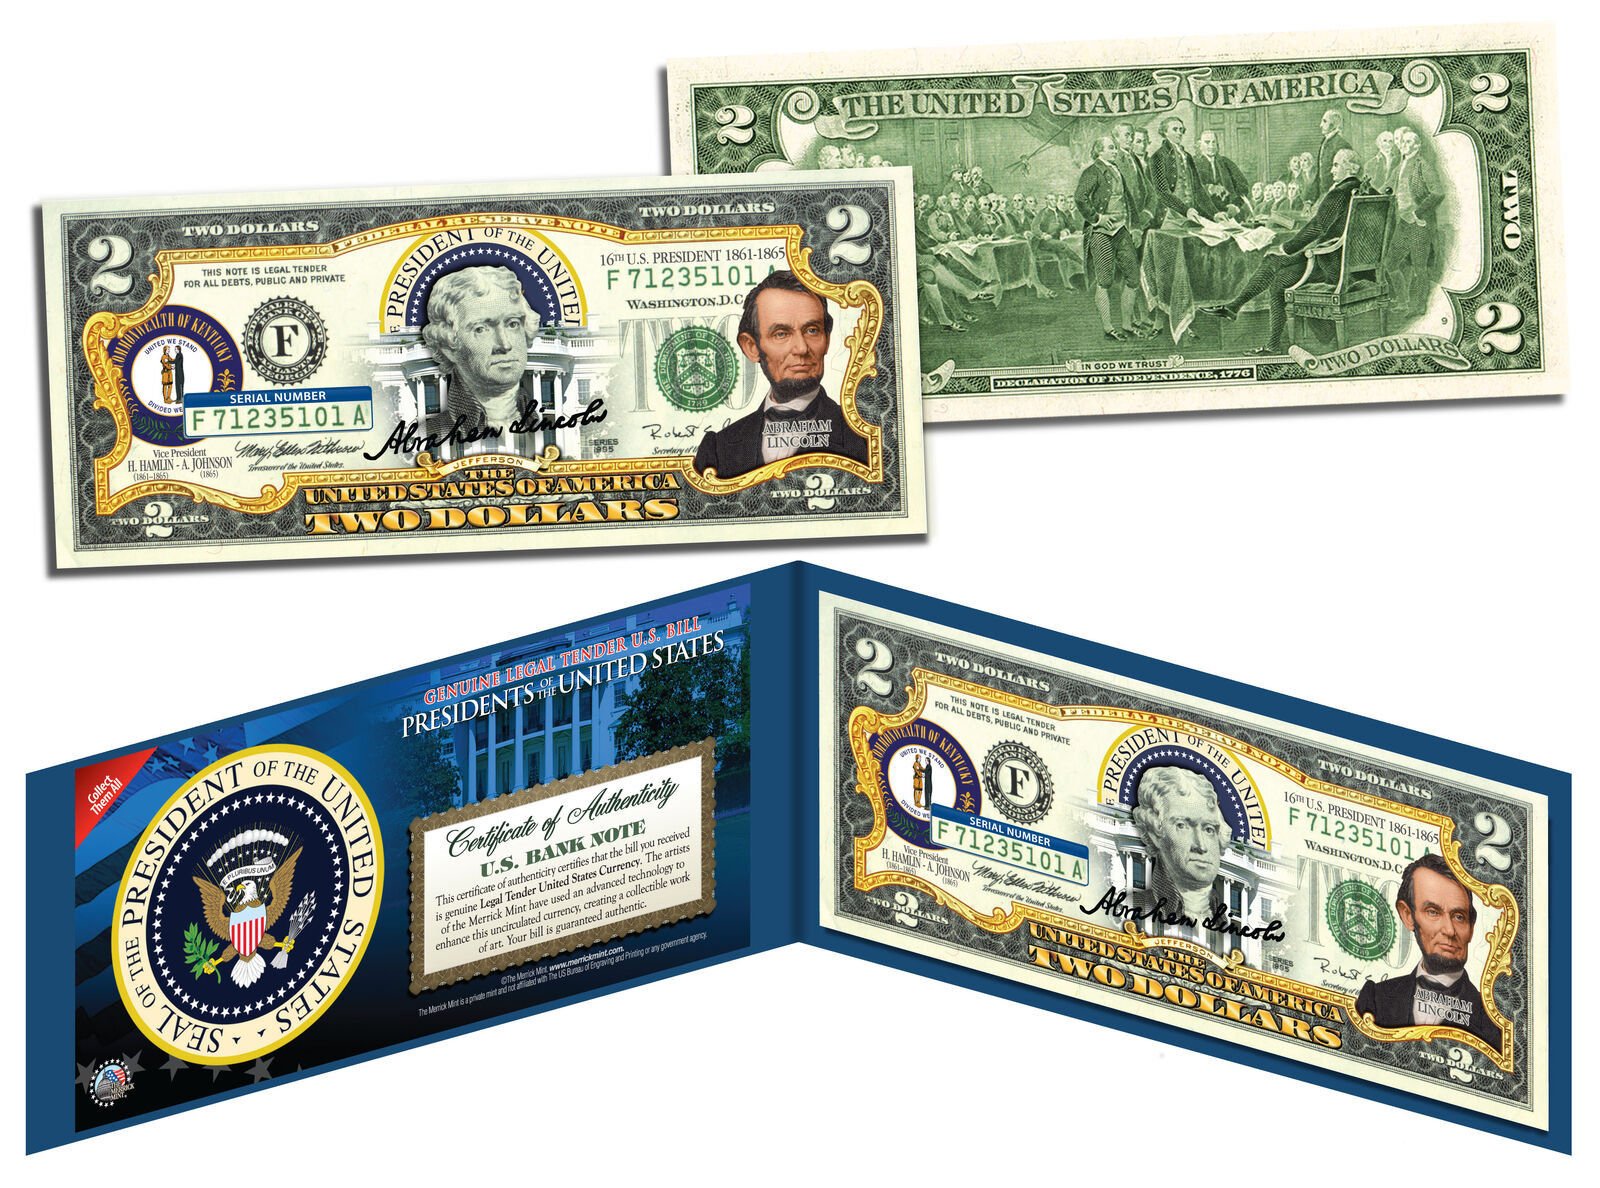 ABRAHAM LINCOLN * 16th U.S. President * Colorized $2 Bill - Genuine Legal Tender